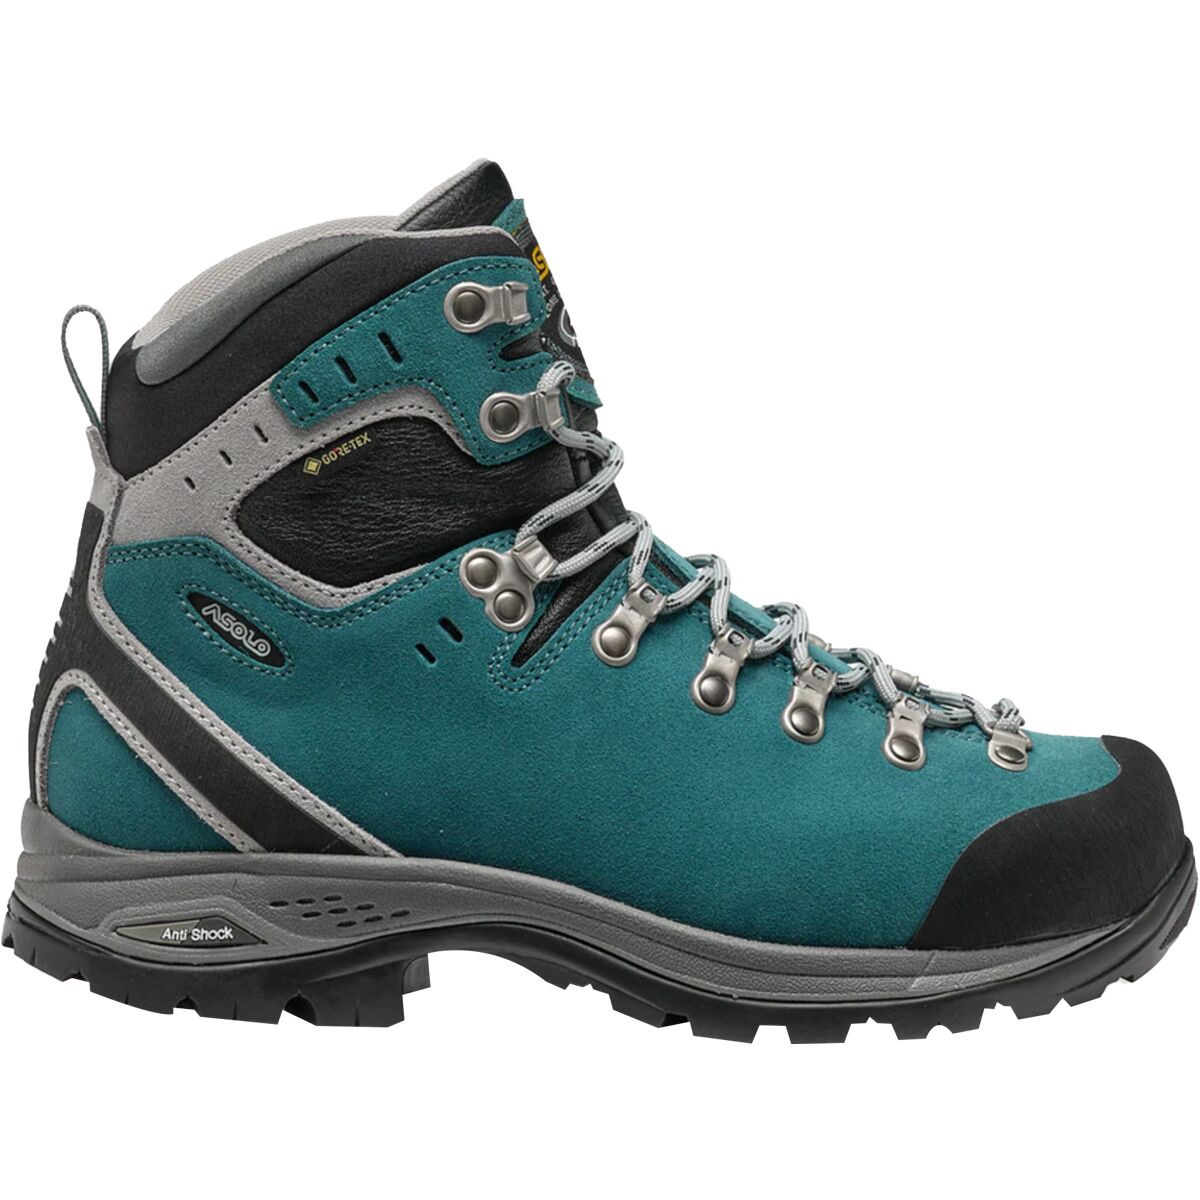 Greenwood Evo GV Hiking Boot - Bunion Fit - Women